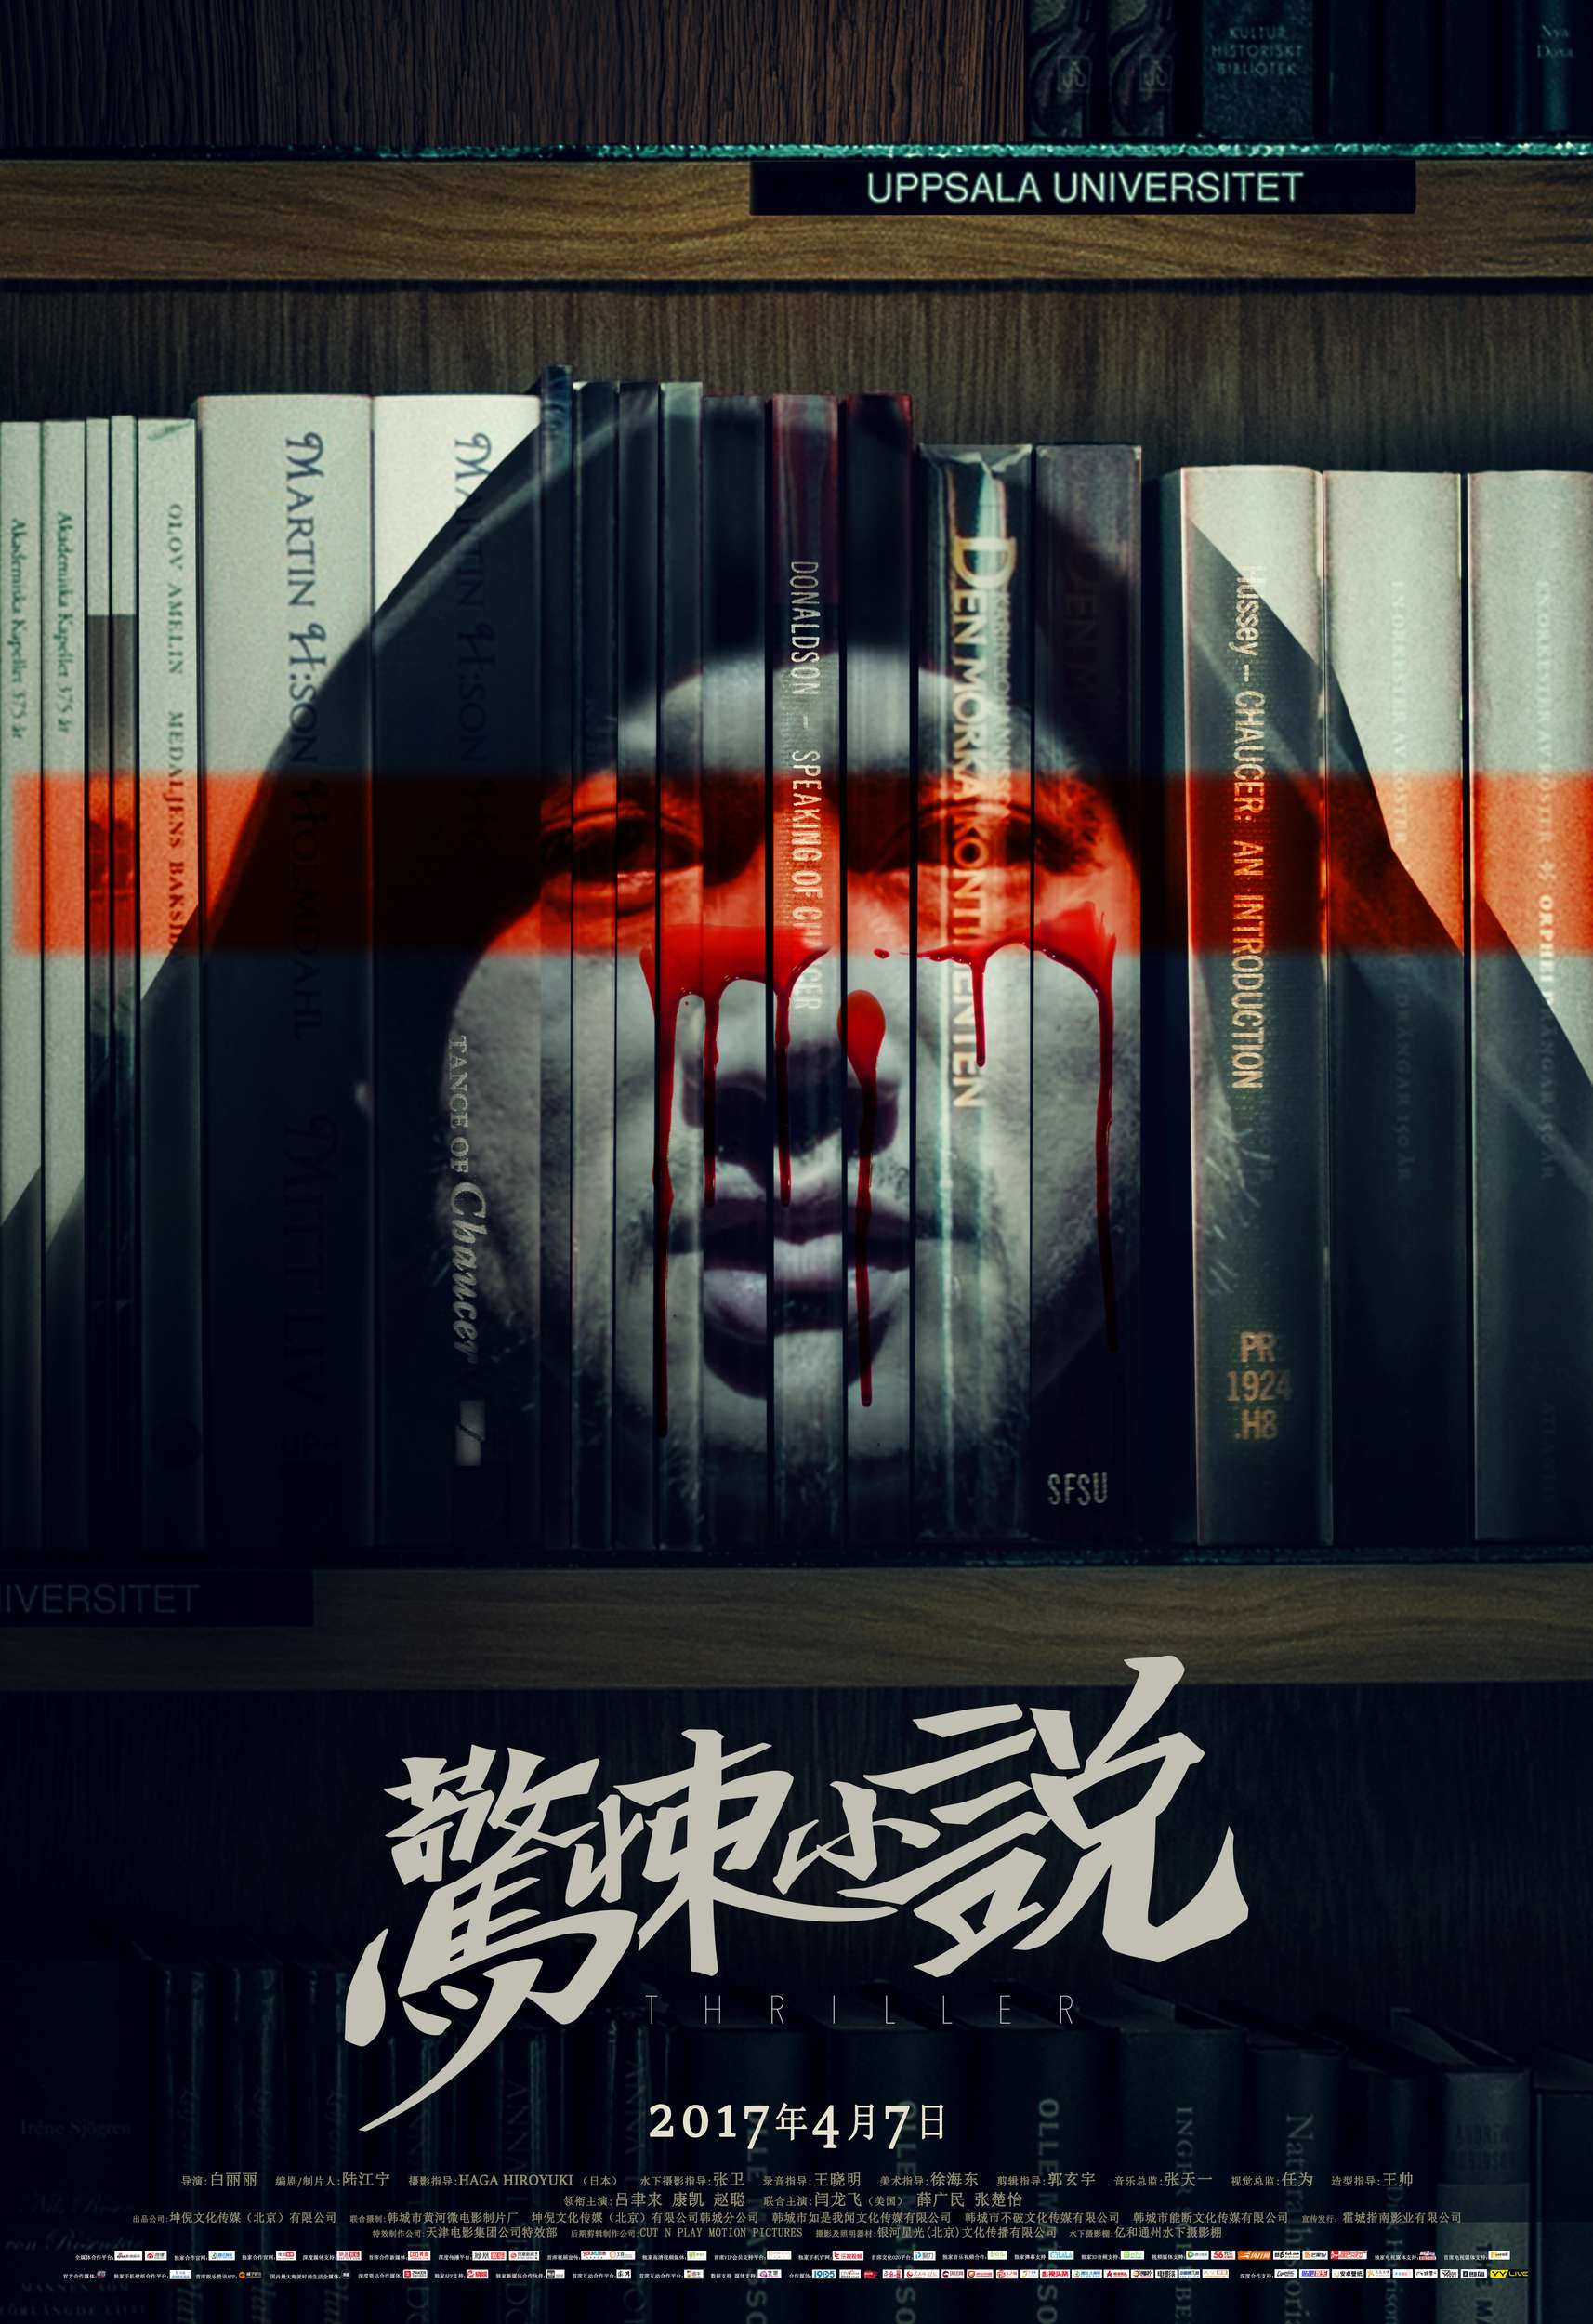 Tiểu Thuyết Kinh Dị - Inside: A Chinese Horror Story